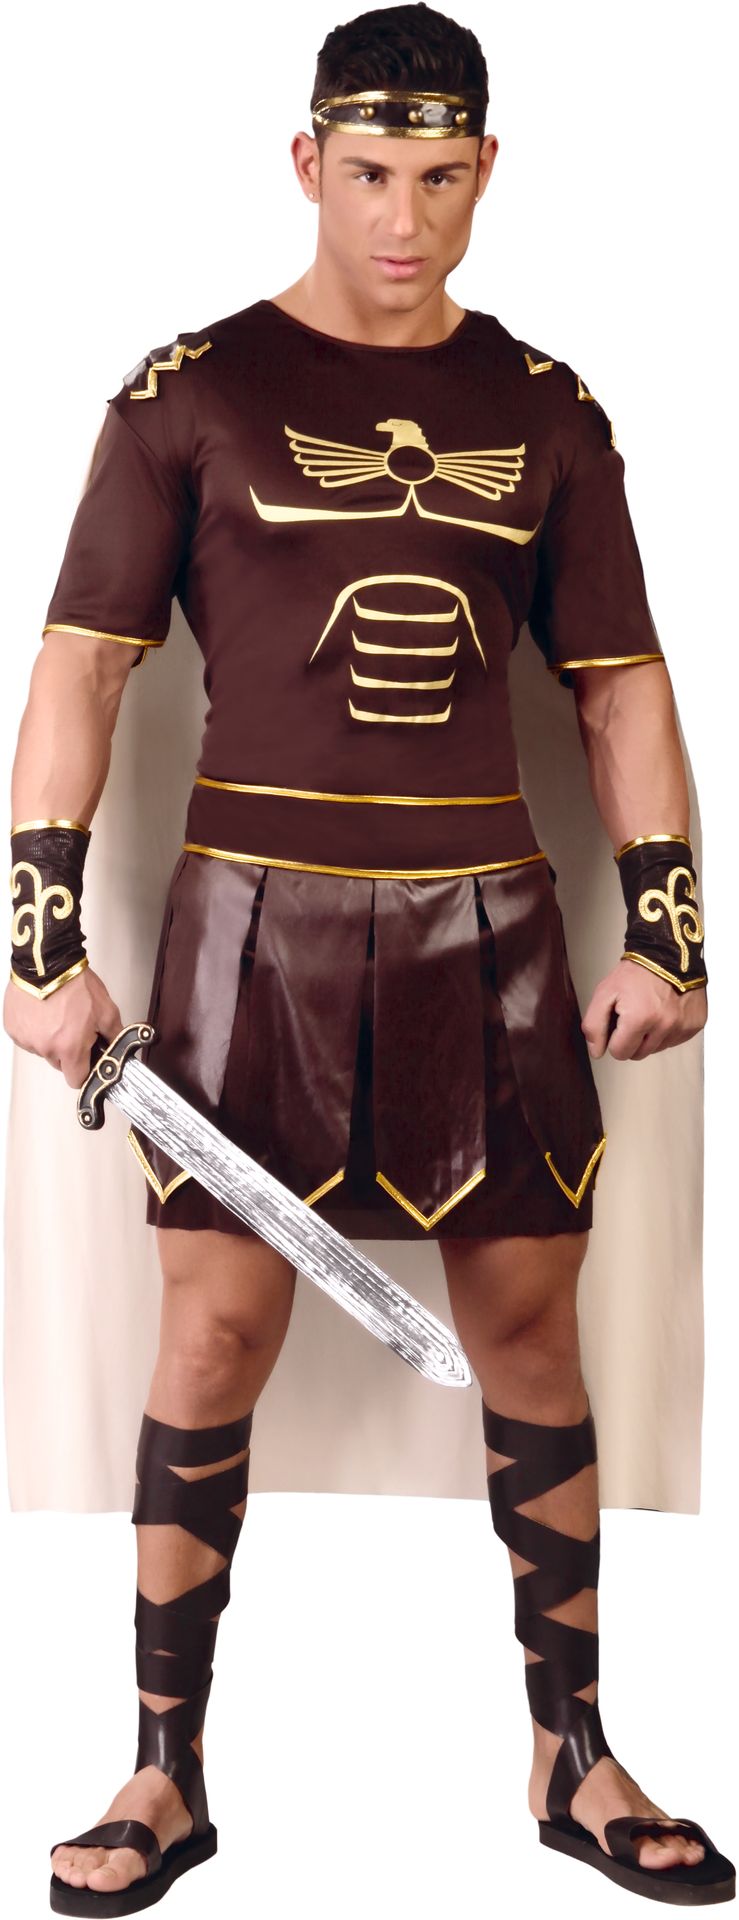 Gladiator kostuum heren